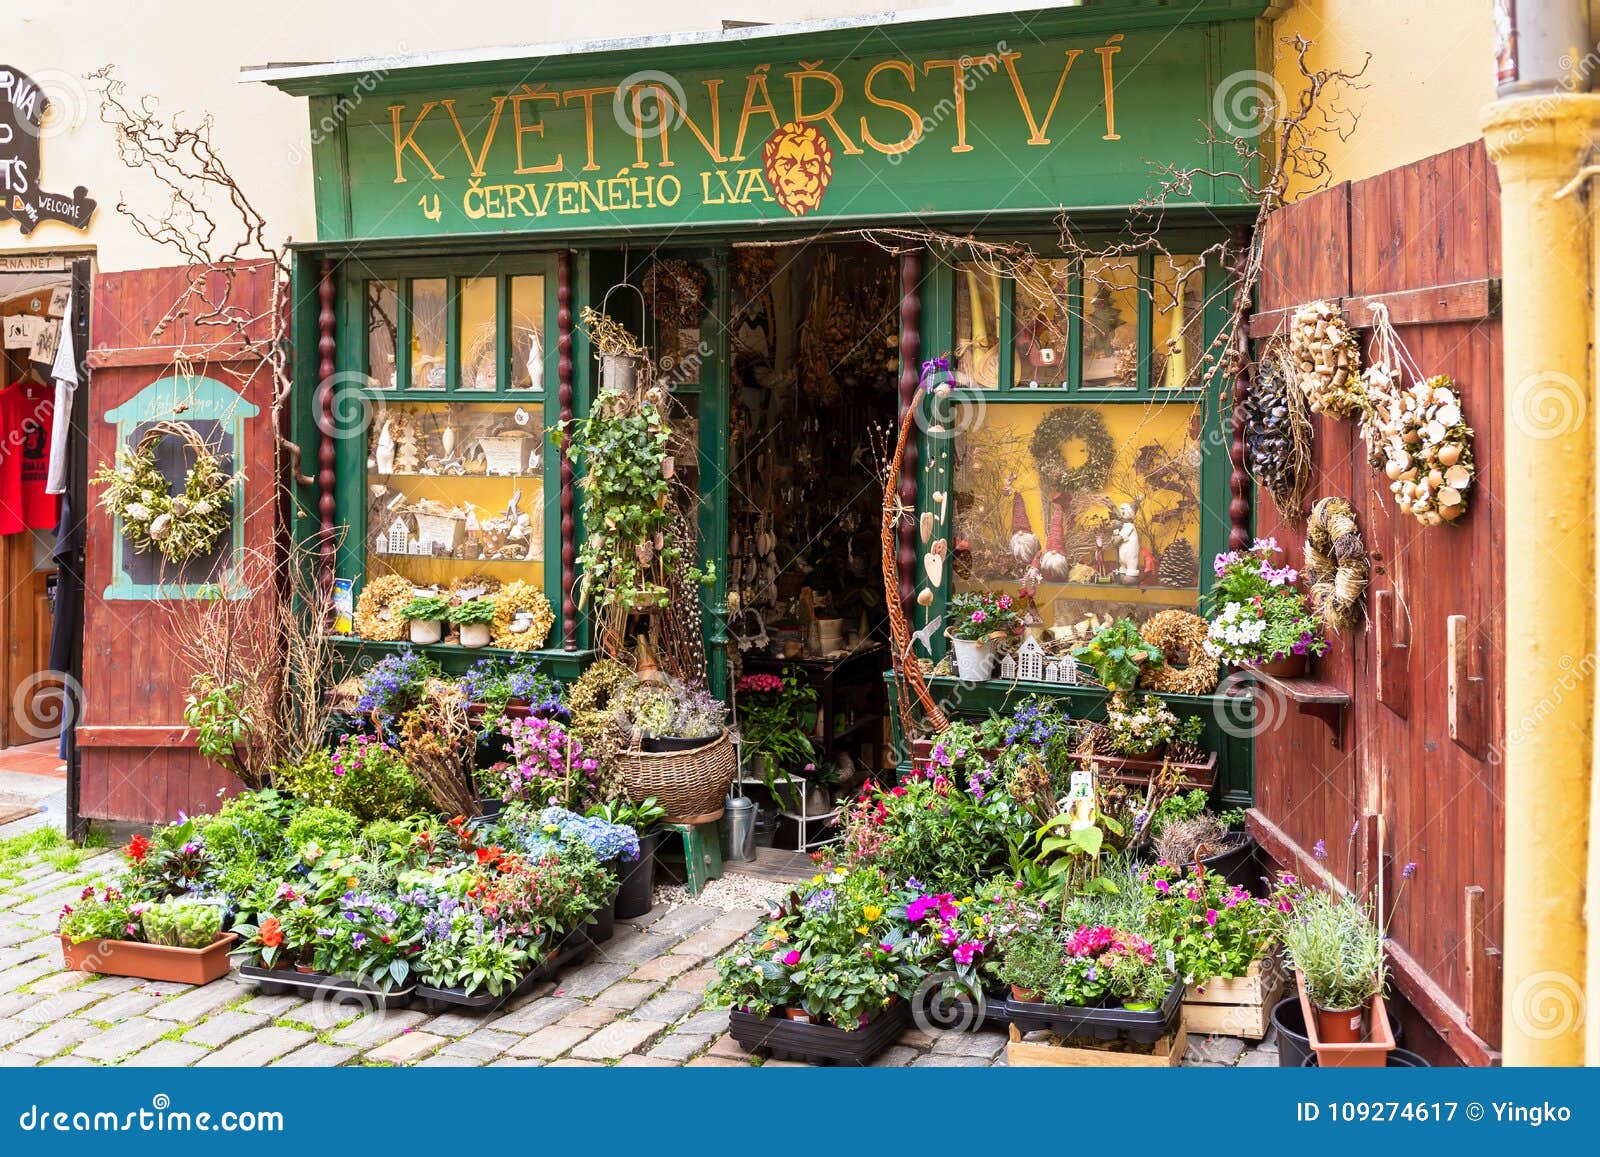 clayton friday share czech streets flower shop photos